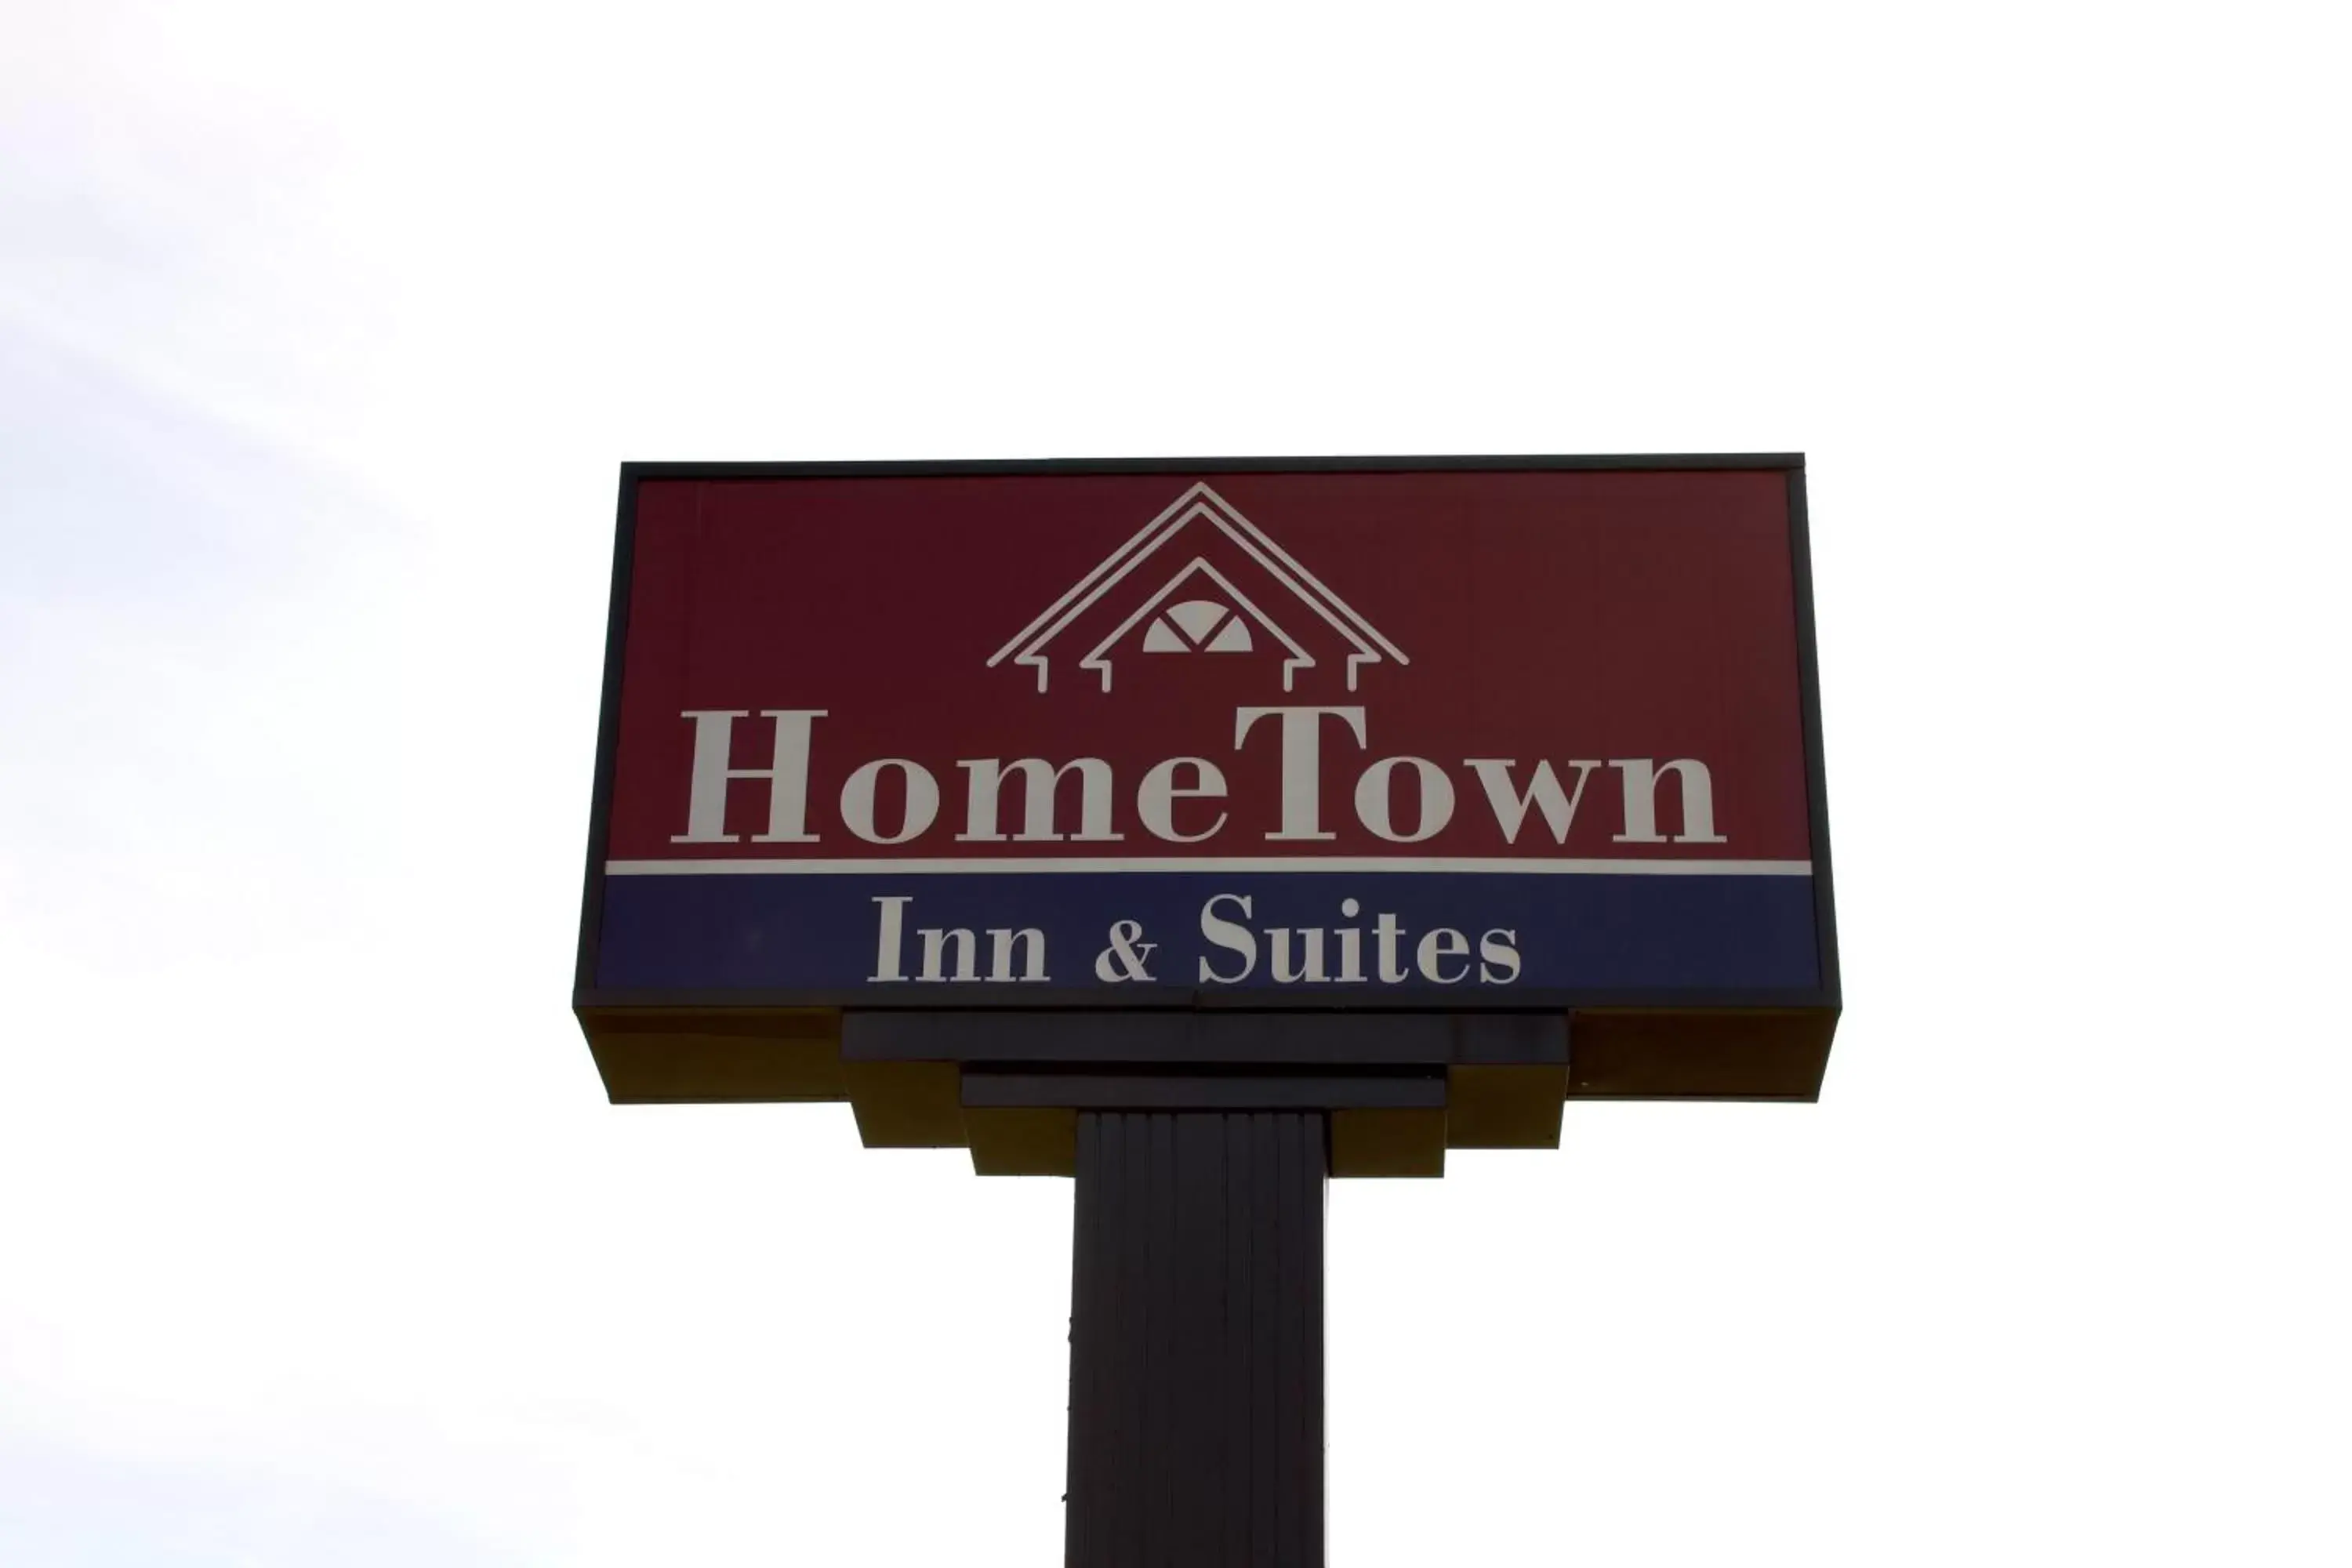 Property logo or sign in HomeTown Inn & Suites